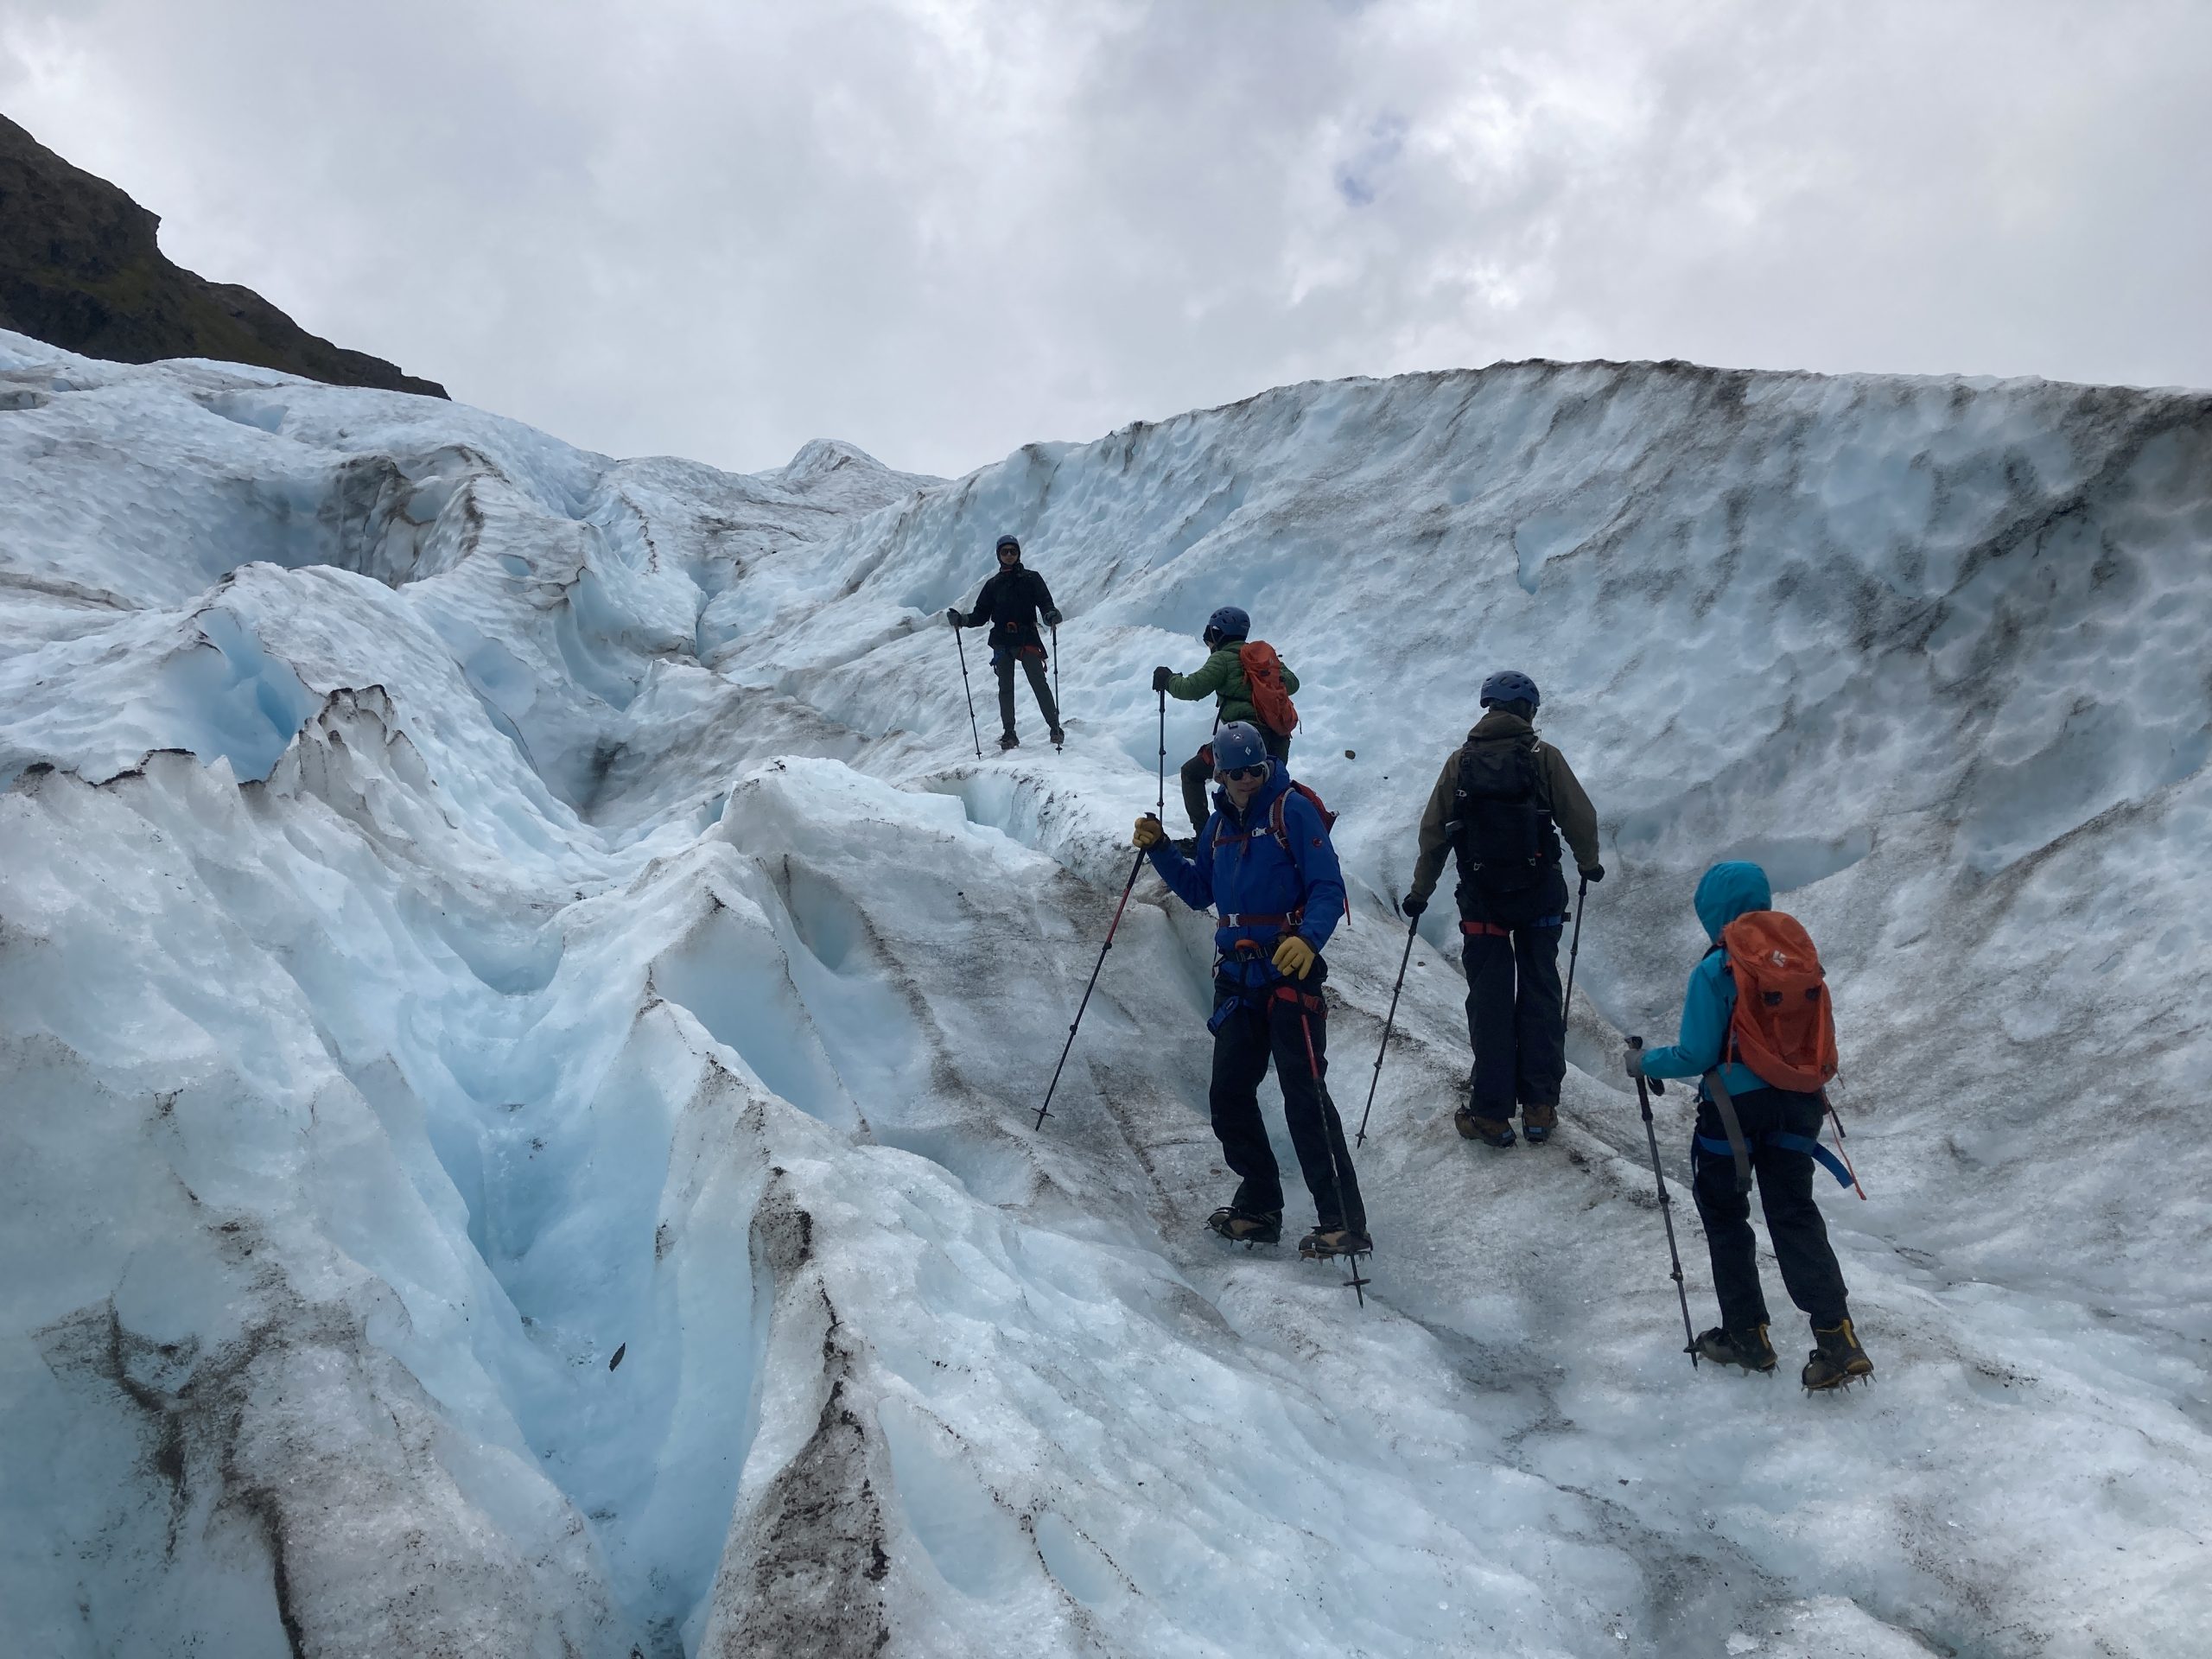 TRIP REPORT: 8/30/22 Exit Glacier Ice Hiking Adventure